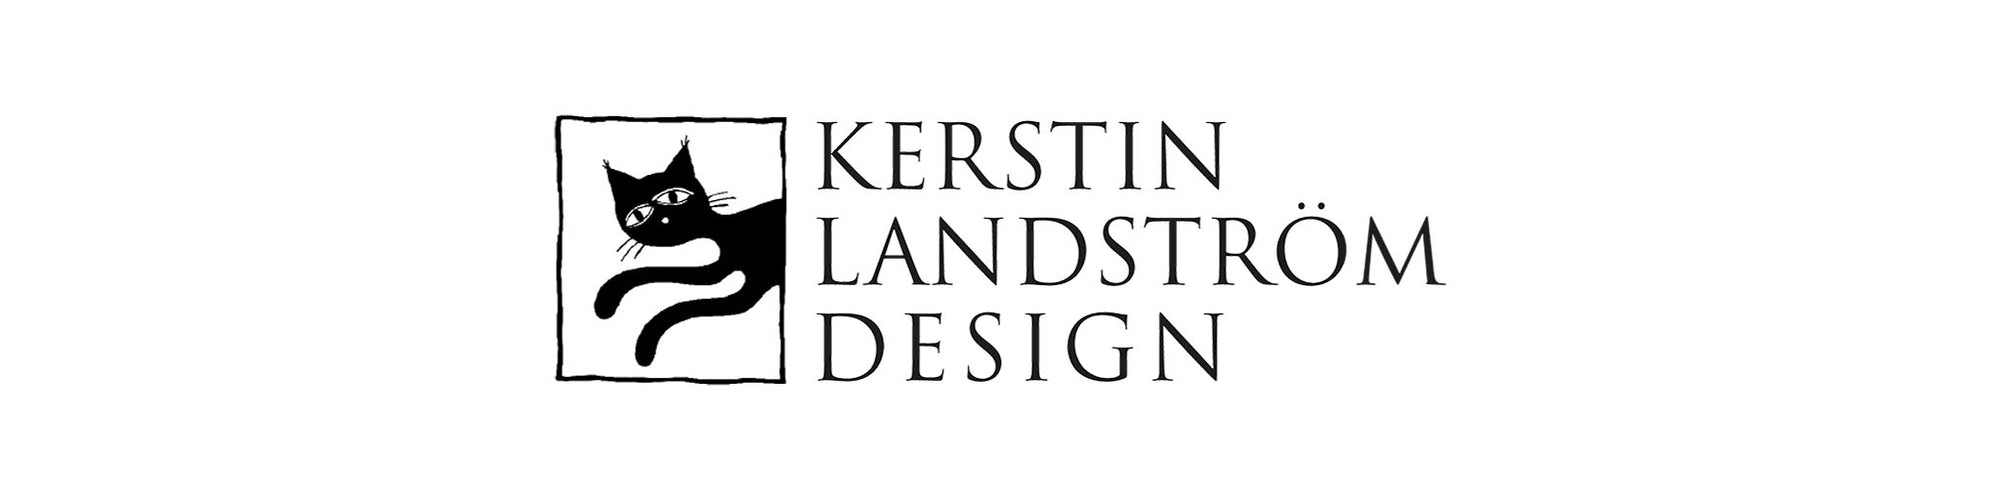 Tidlös ullpäd - Design Kerstin Landström